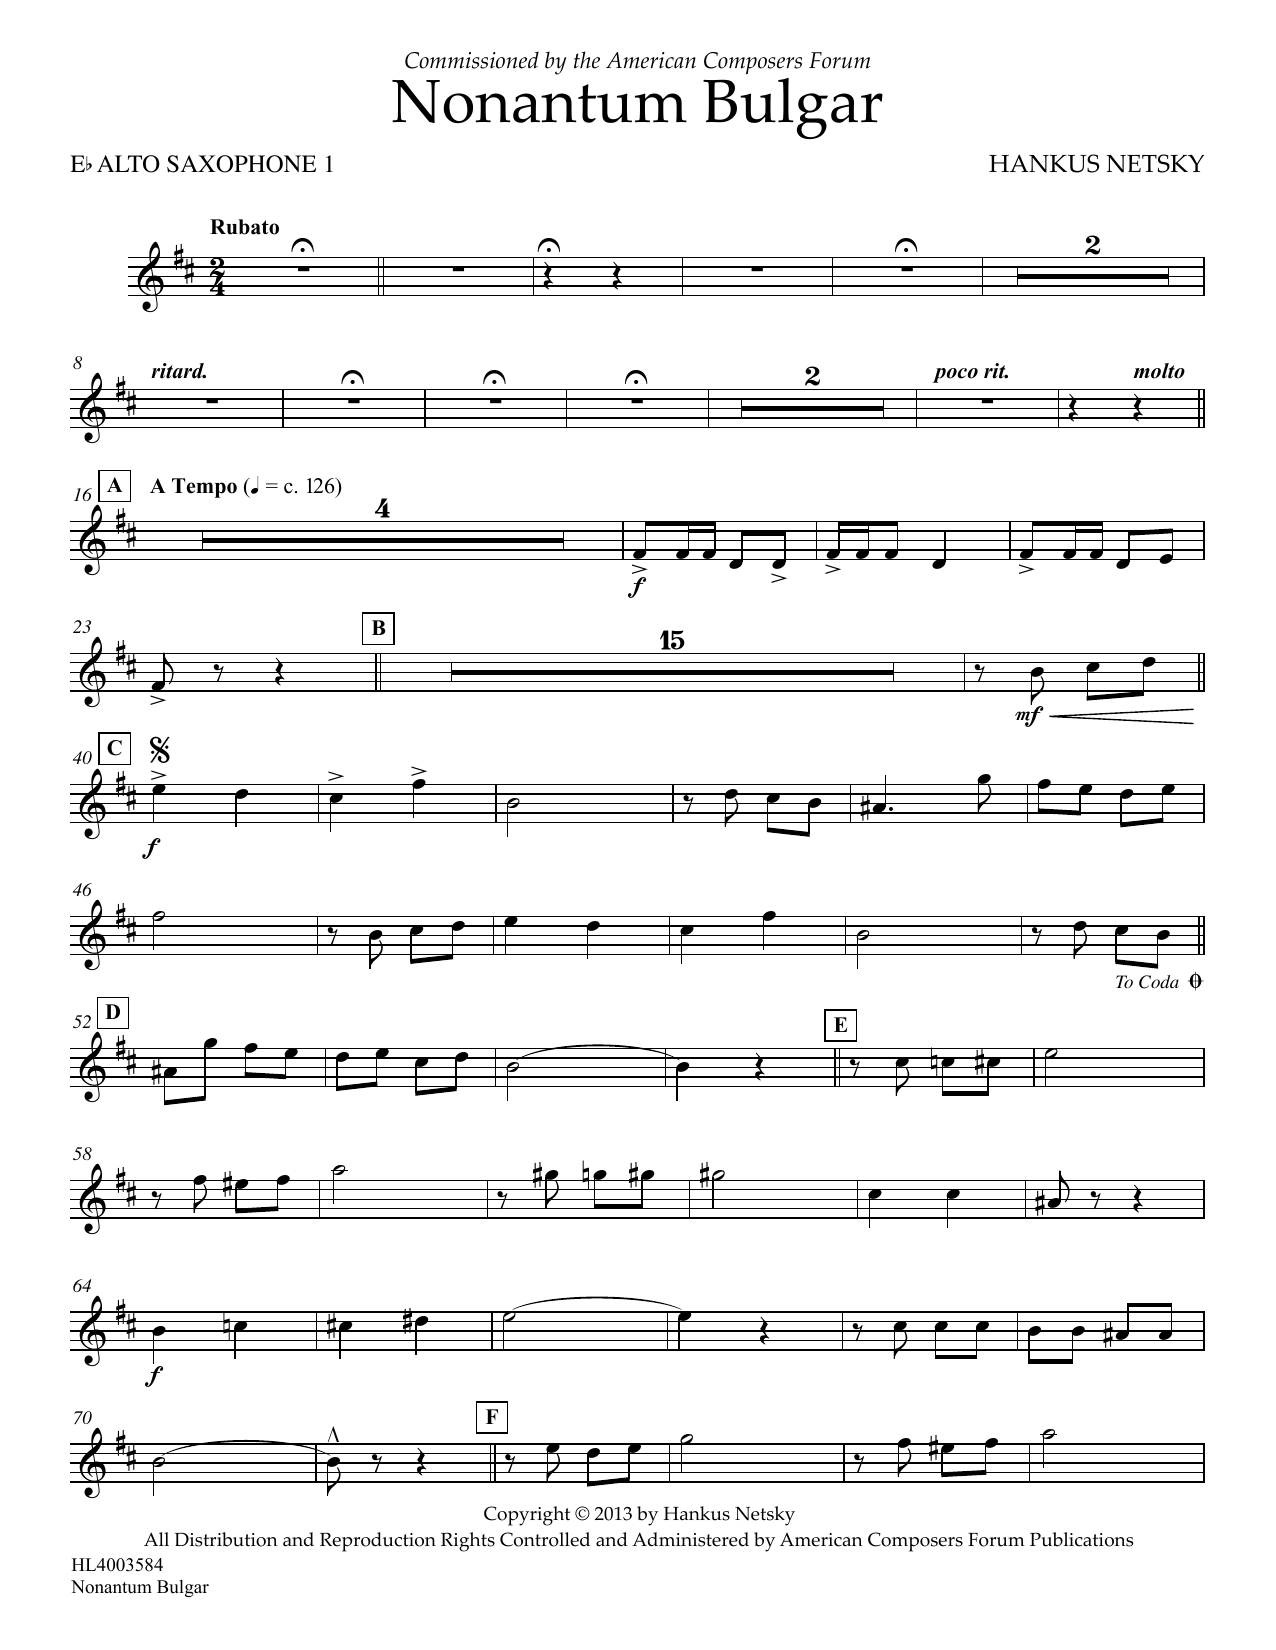 Hankus Netsky Nonantum Bulgar - Eb Alto Saxophone 1 Sheet Music Notes & Chords for Concert Band - Download or Print PDF